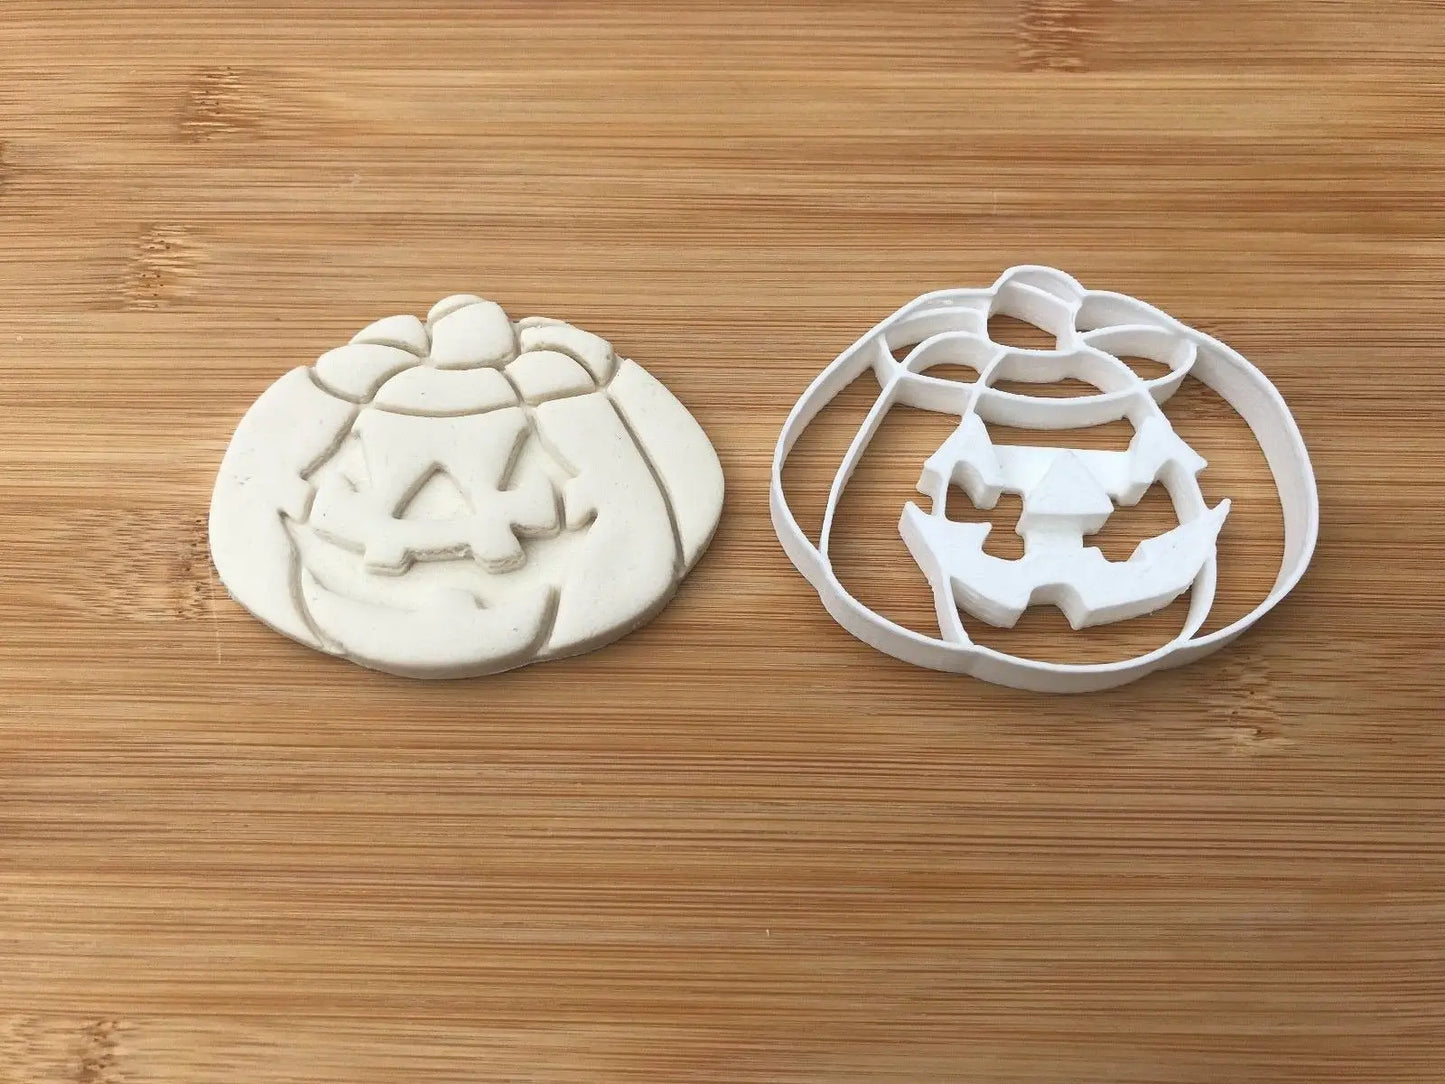 Halloween Uk Seller Plastic Biscuit Cookie Cutter Fondant Cake Decor Pumpkin N.3 MEG cookie cutters